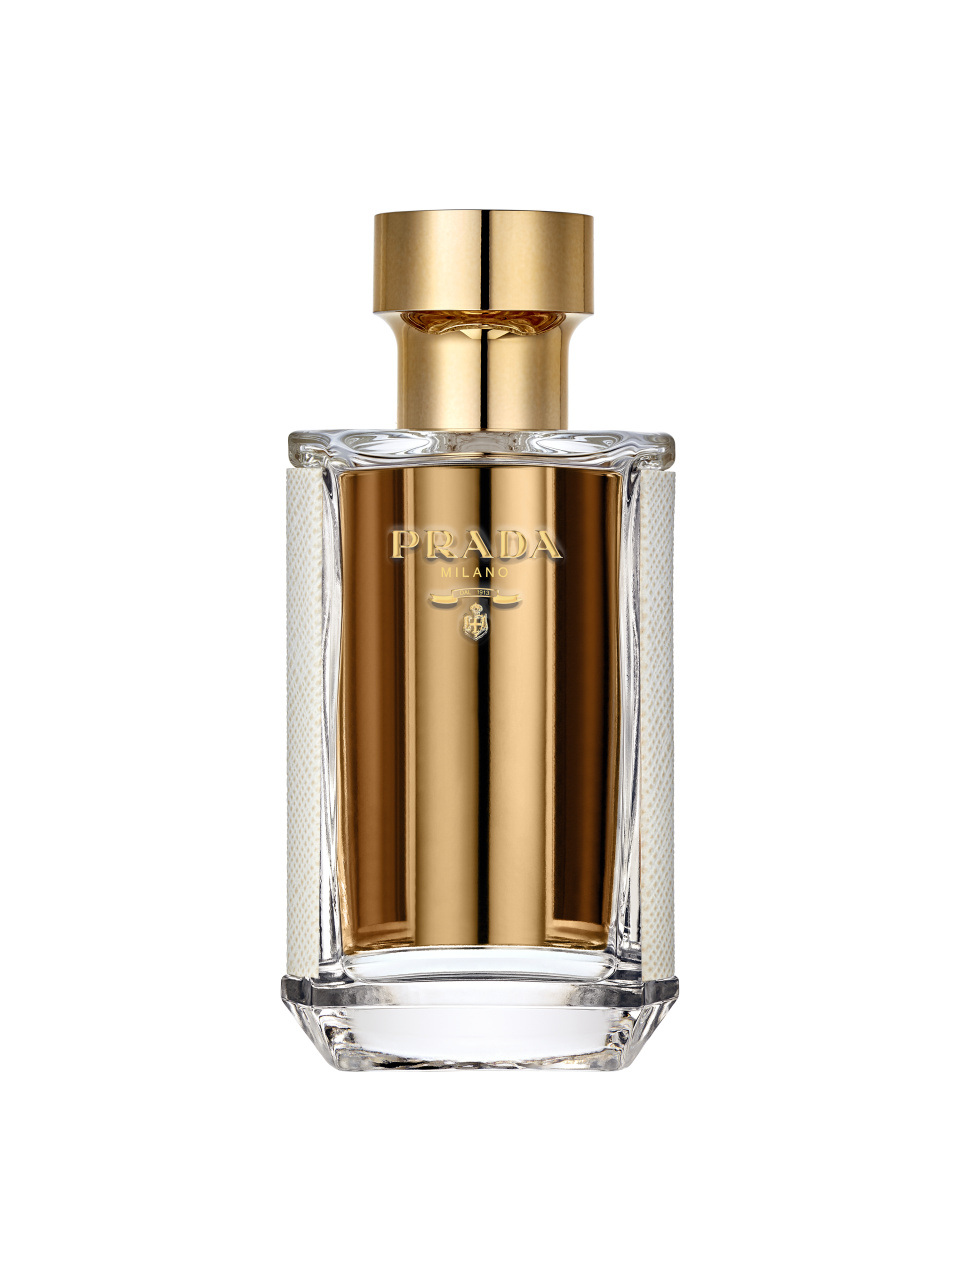 Prada La Femme Eau de Parfum 50 ml null - onesize - 1